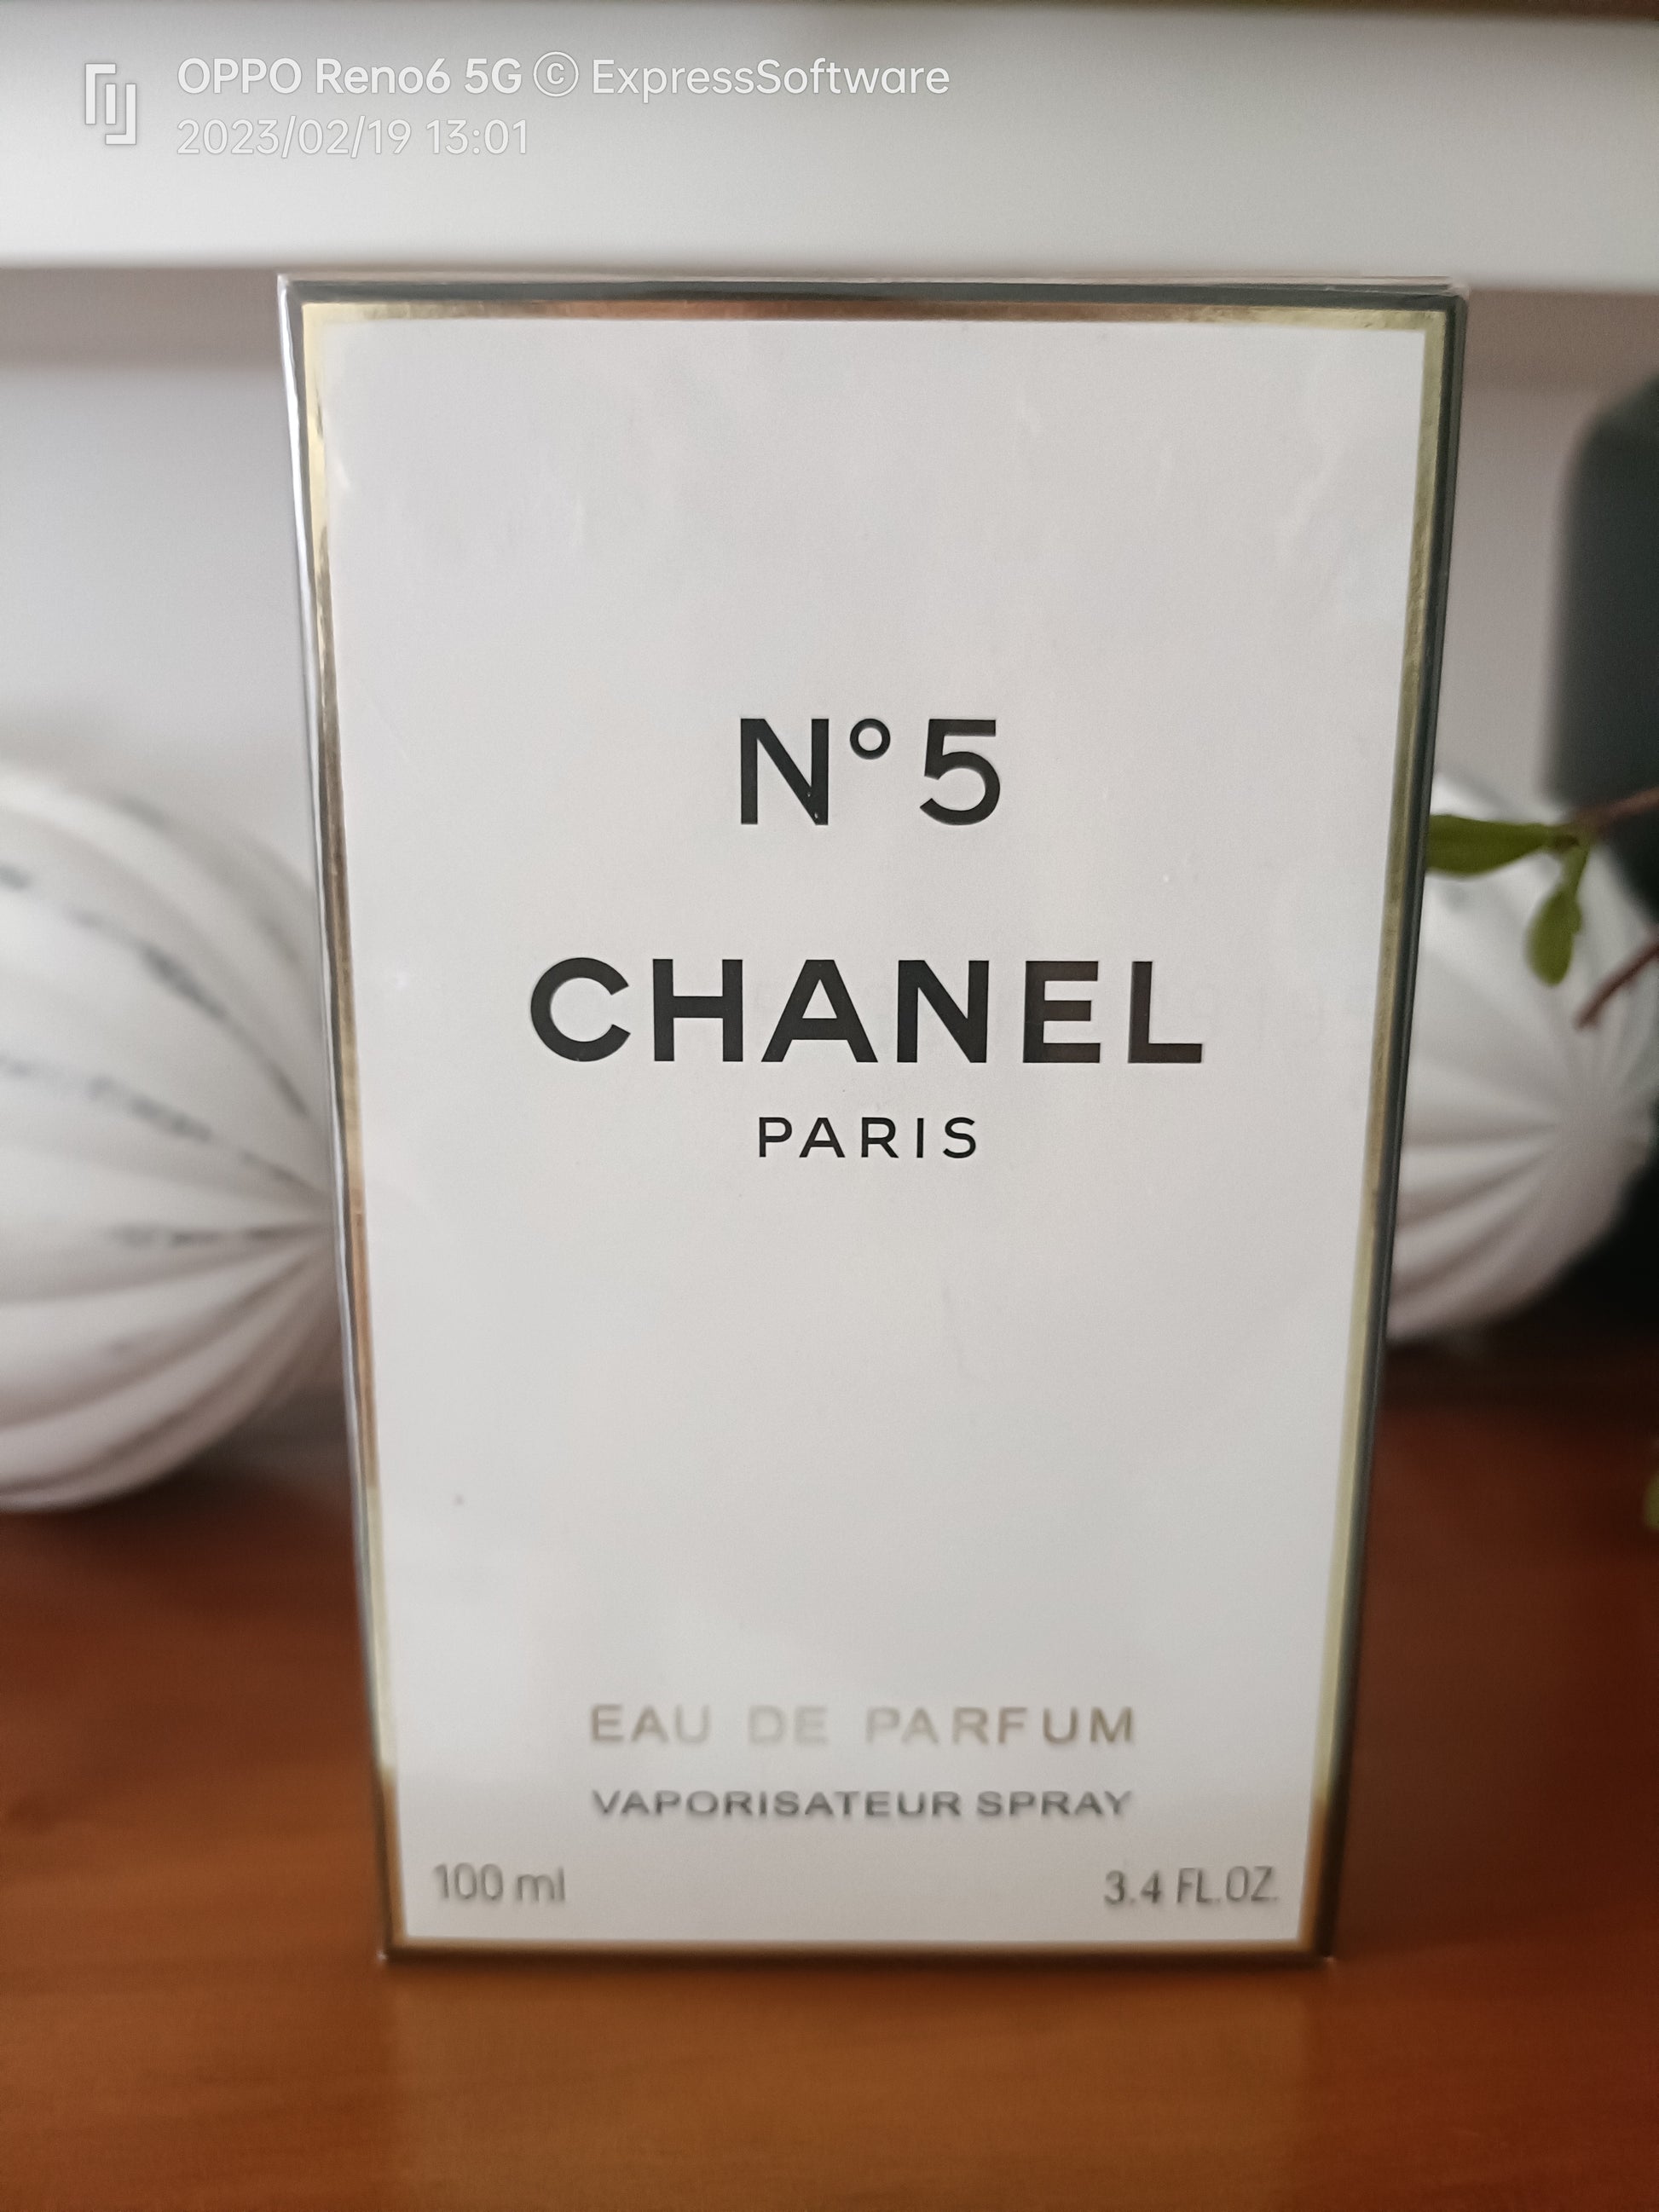 chanel perfume for women 50 ml